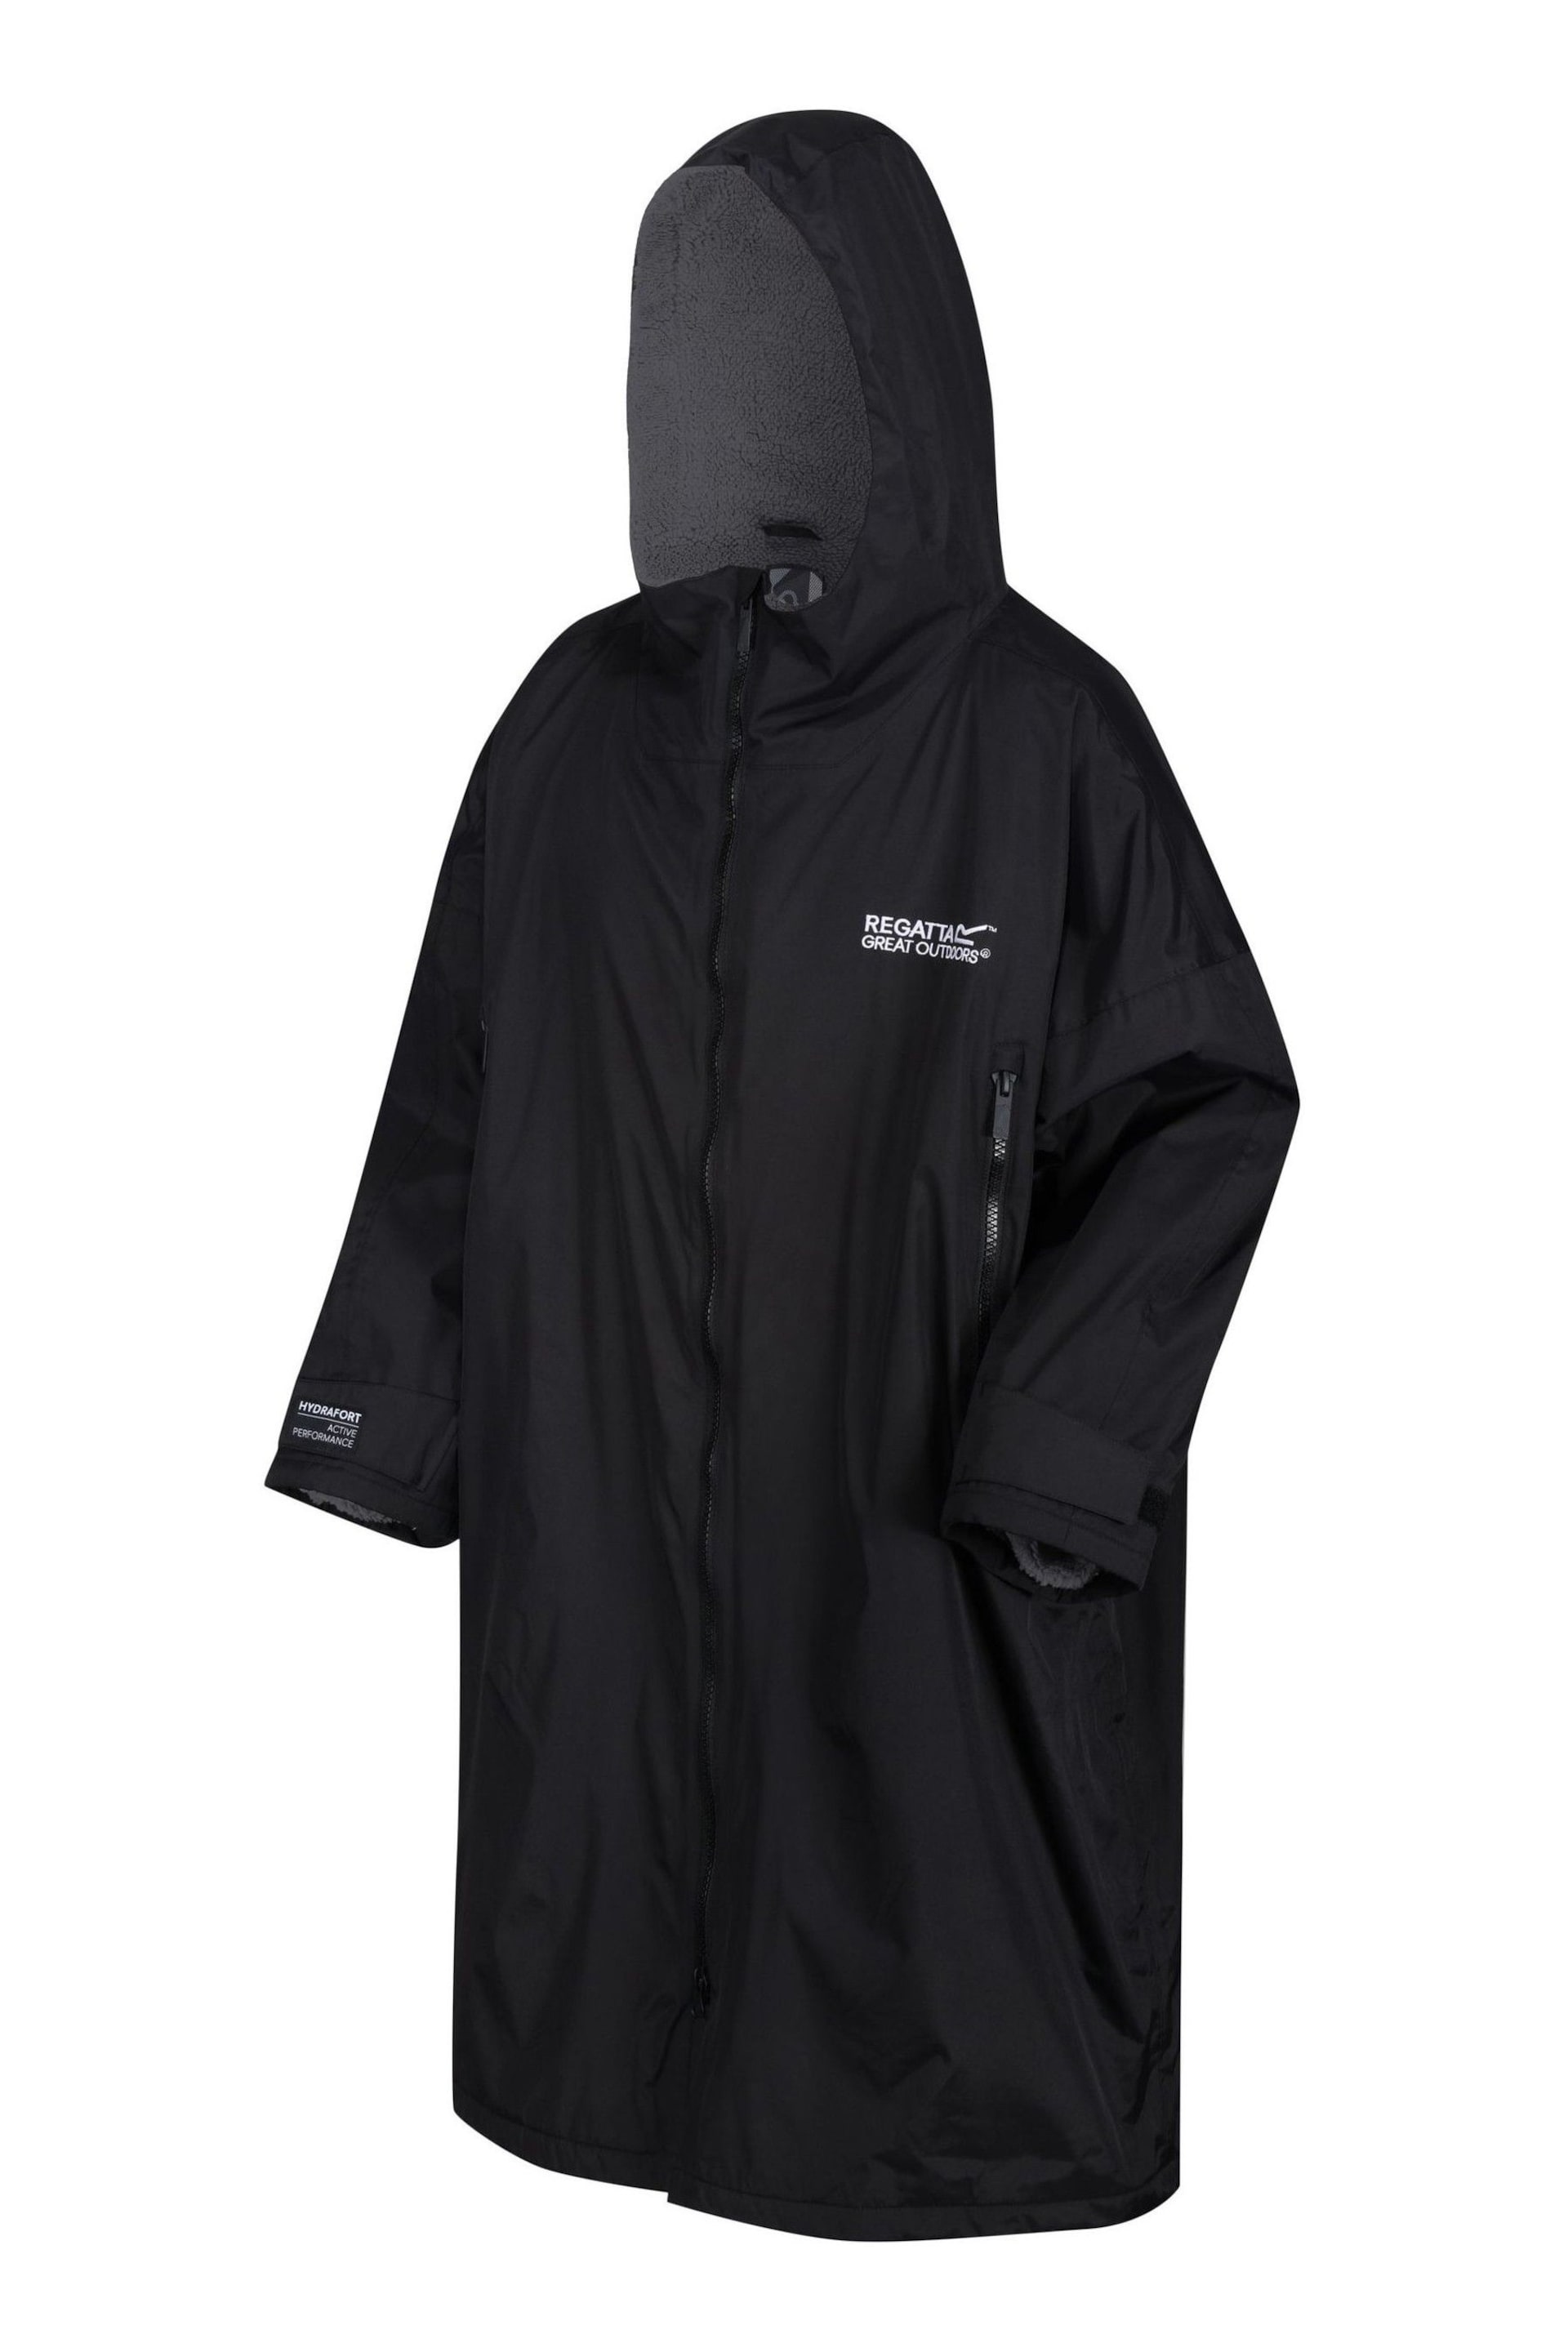 Regatta Black Adult Waterproof Changing Robe - Image 8 of 8